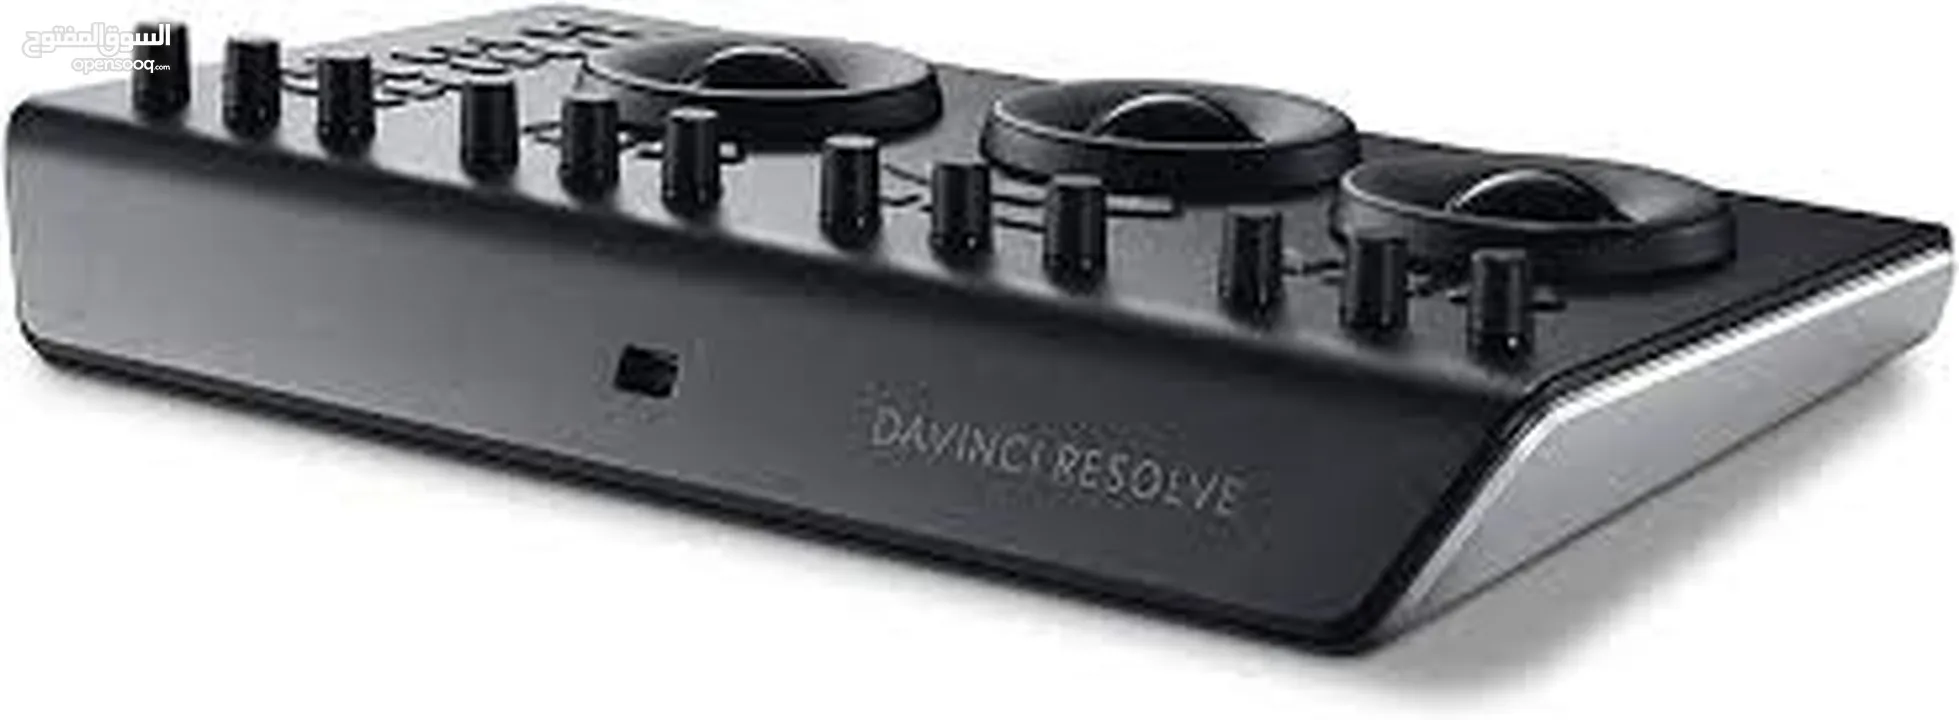 micro control panel for resolve davinci